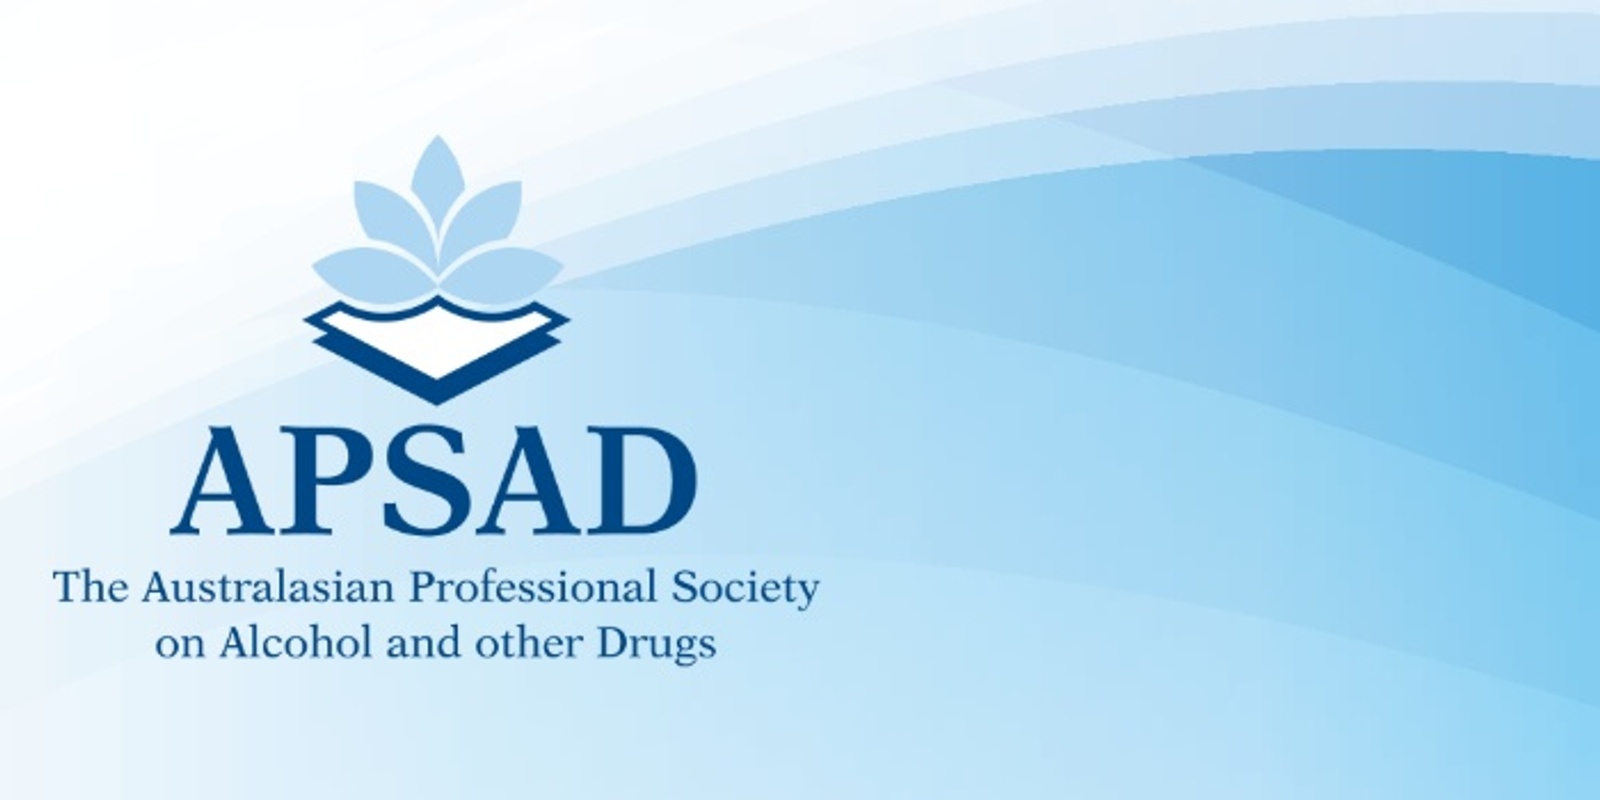 APSAD's banner